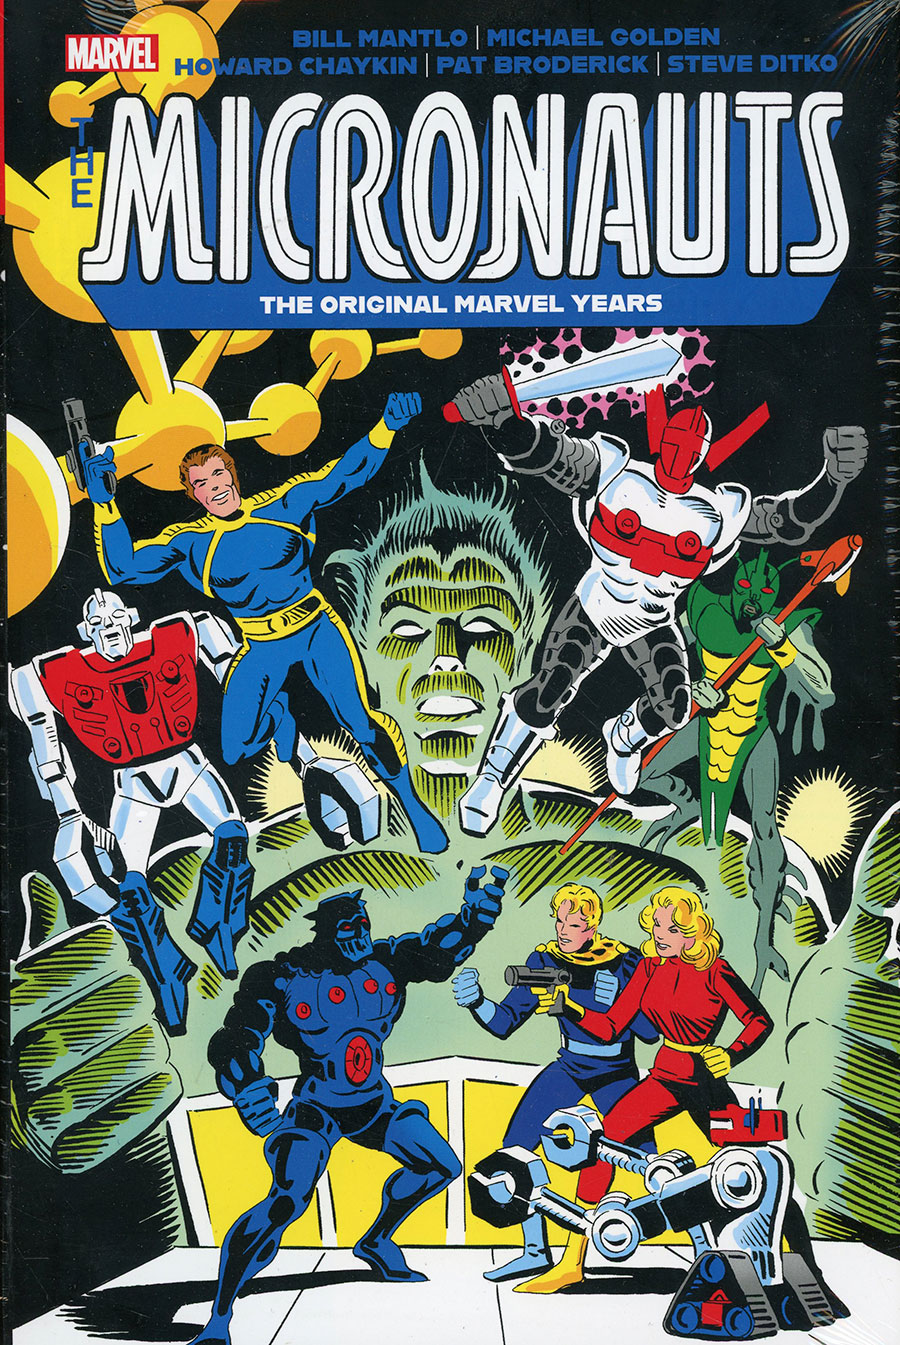 Micronauts Original Marvel Years Omnibus Vol 1 HC Direct Market Steve Ditko Variant Cover